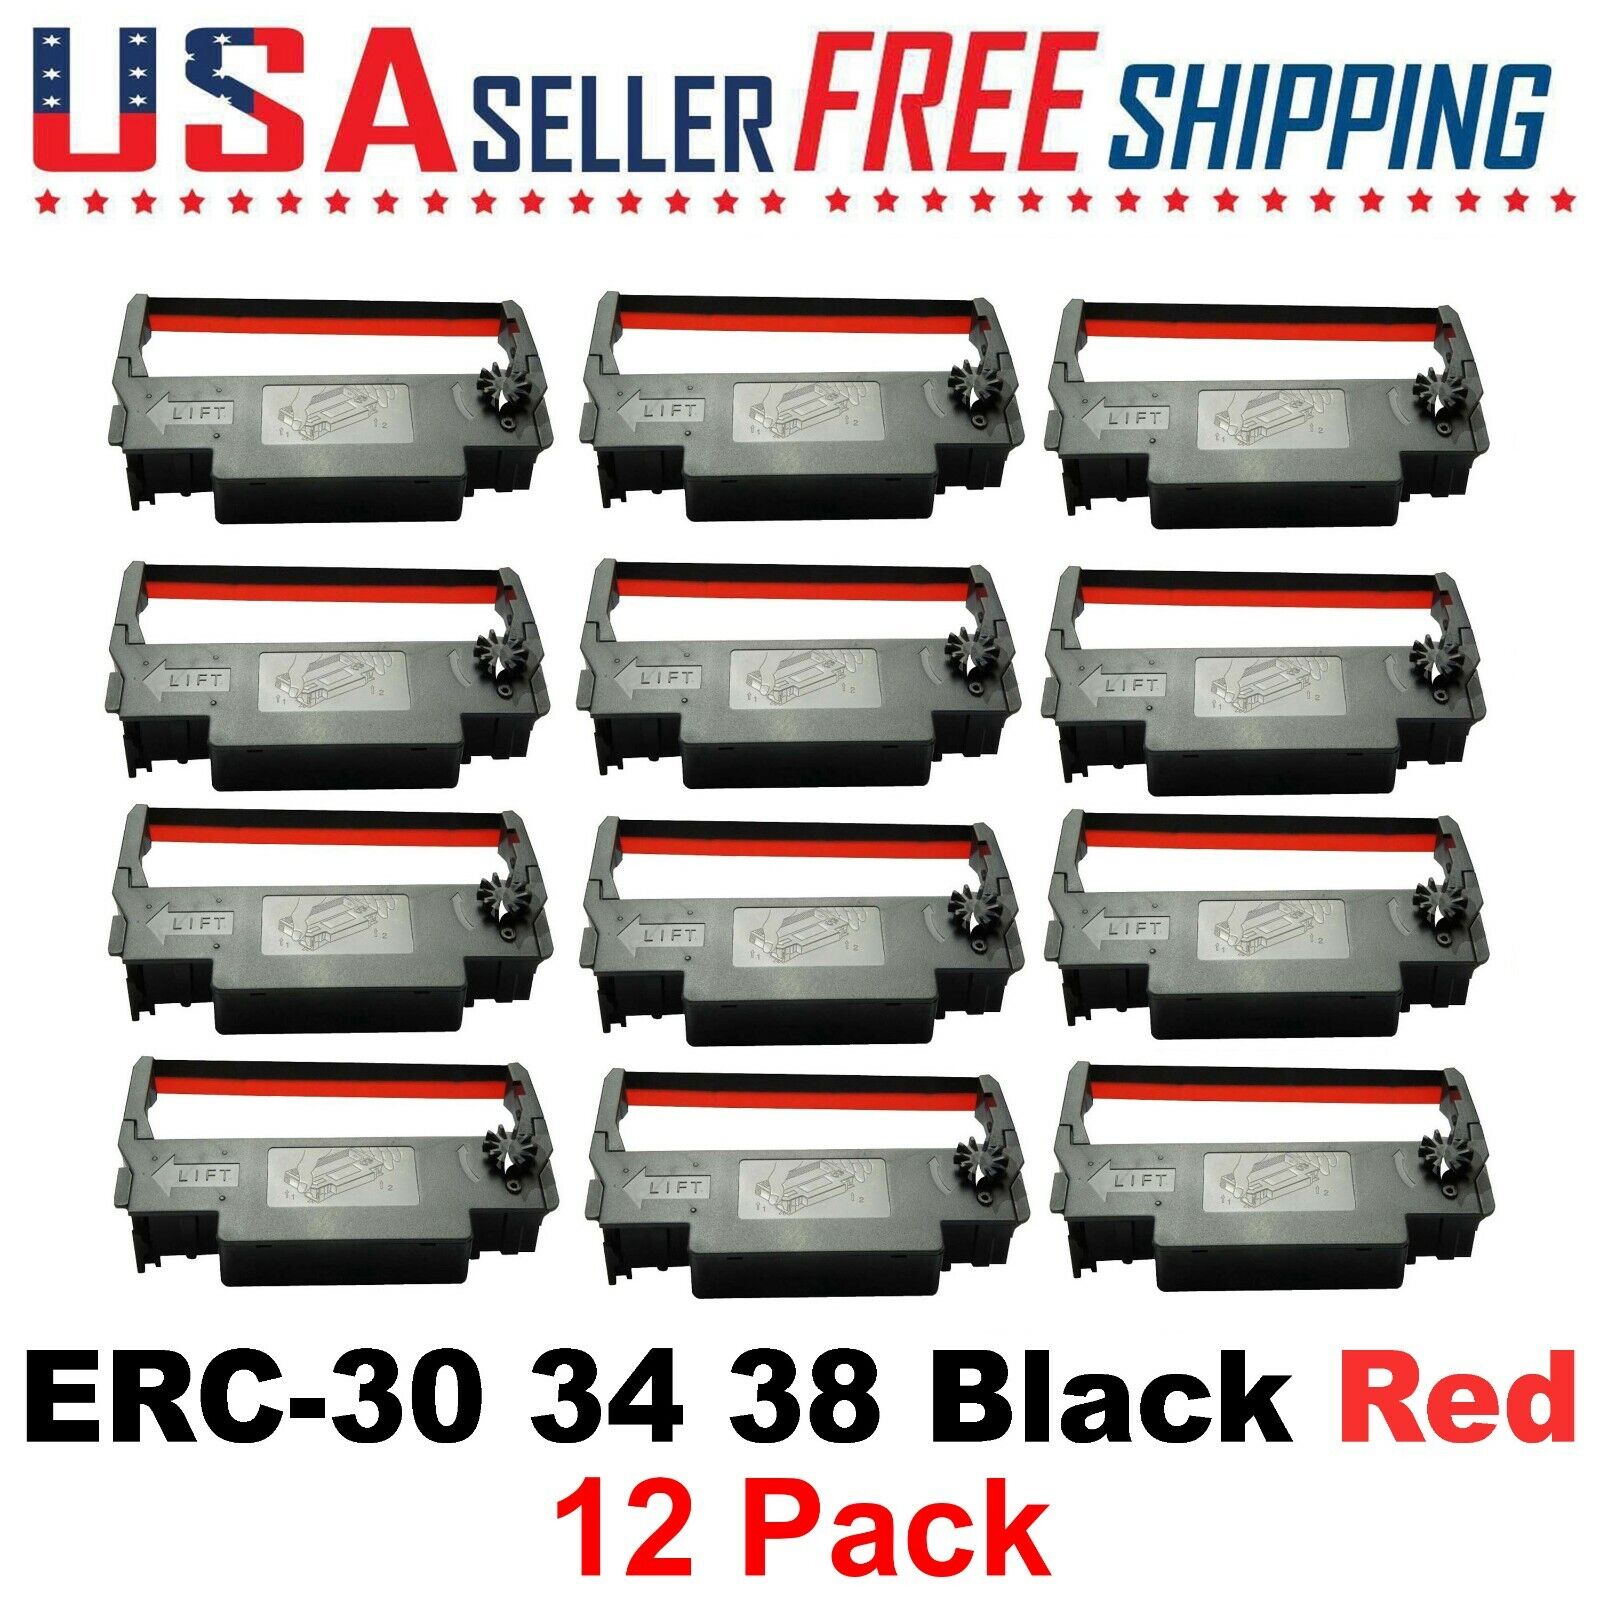 ERC-30 / ERC-34 / ERC-38 x 12 Pack Ribbon Black Red Ink Ribbon ERC30/34/38